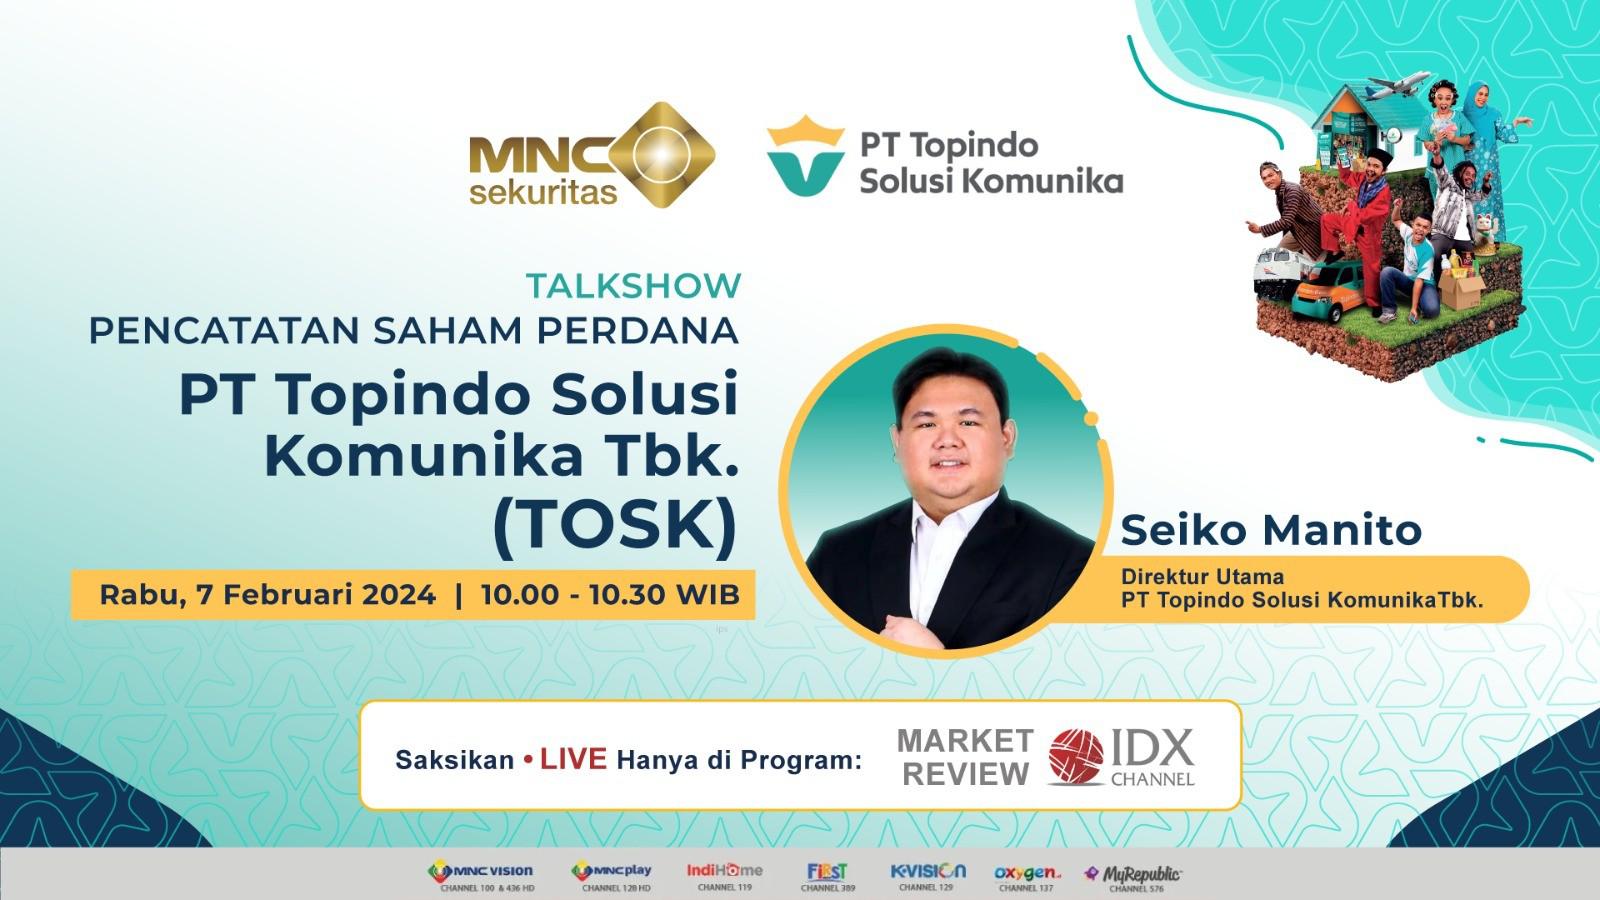 Intip Prospek Bisnis TOSK Lewat Talkshow Market Review IDX Channel